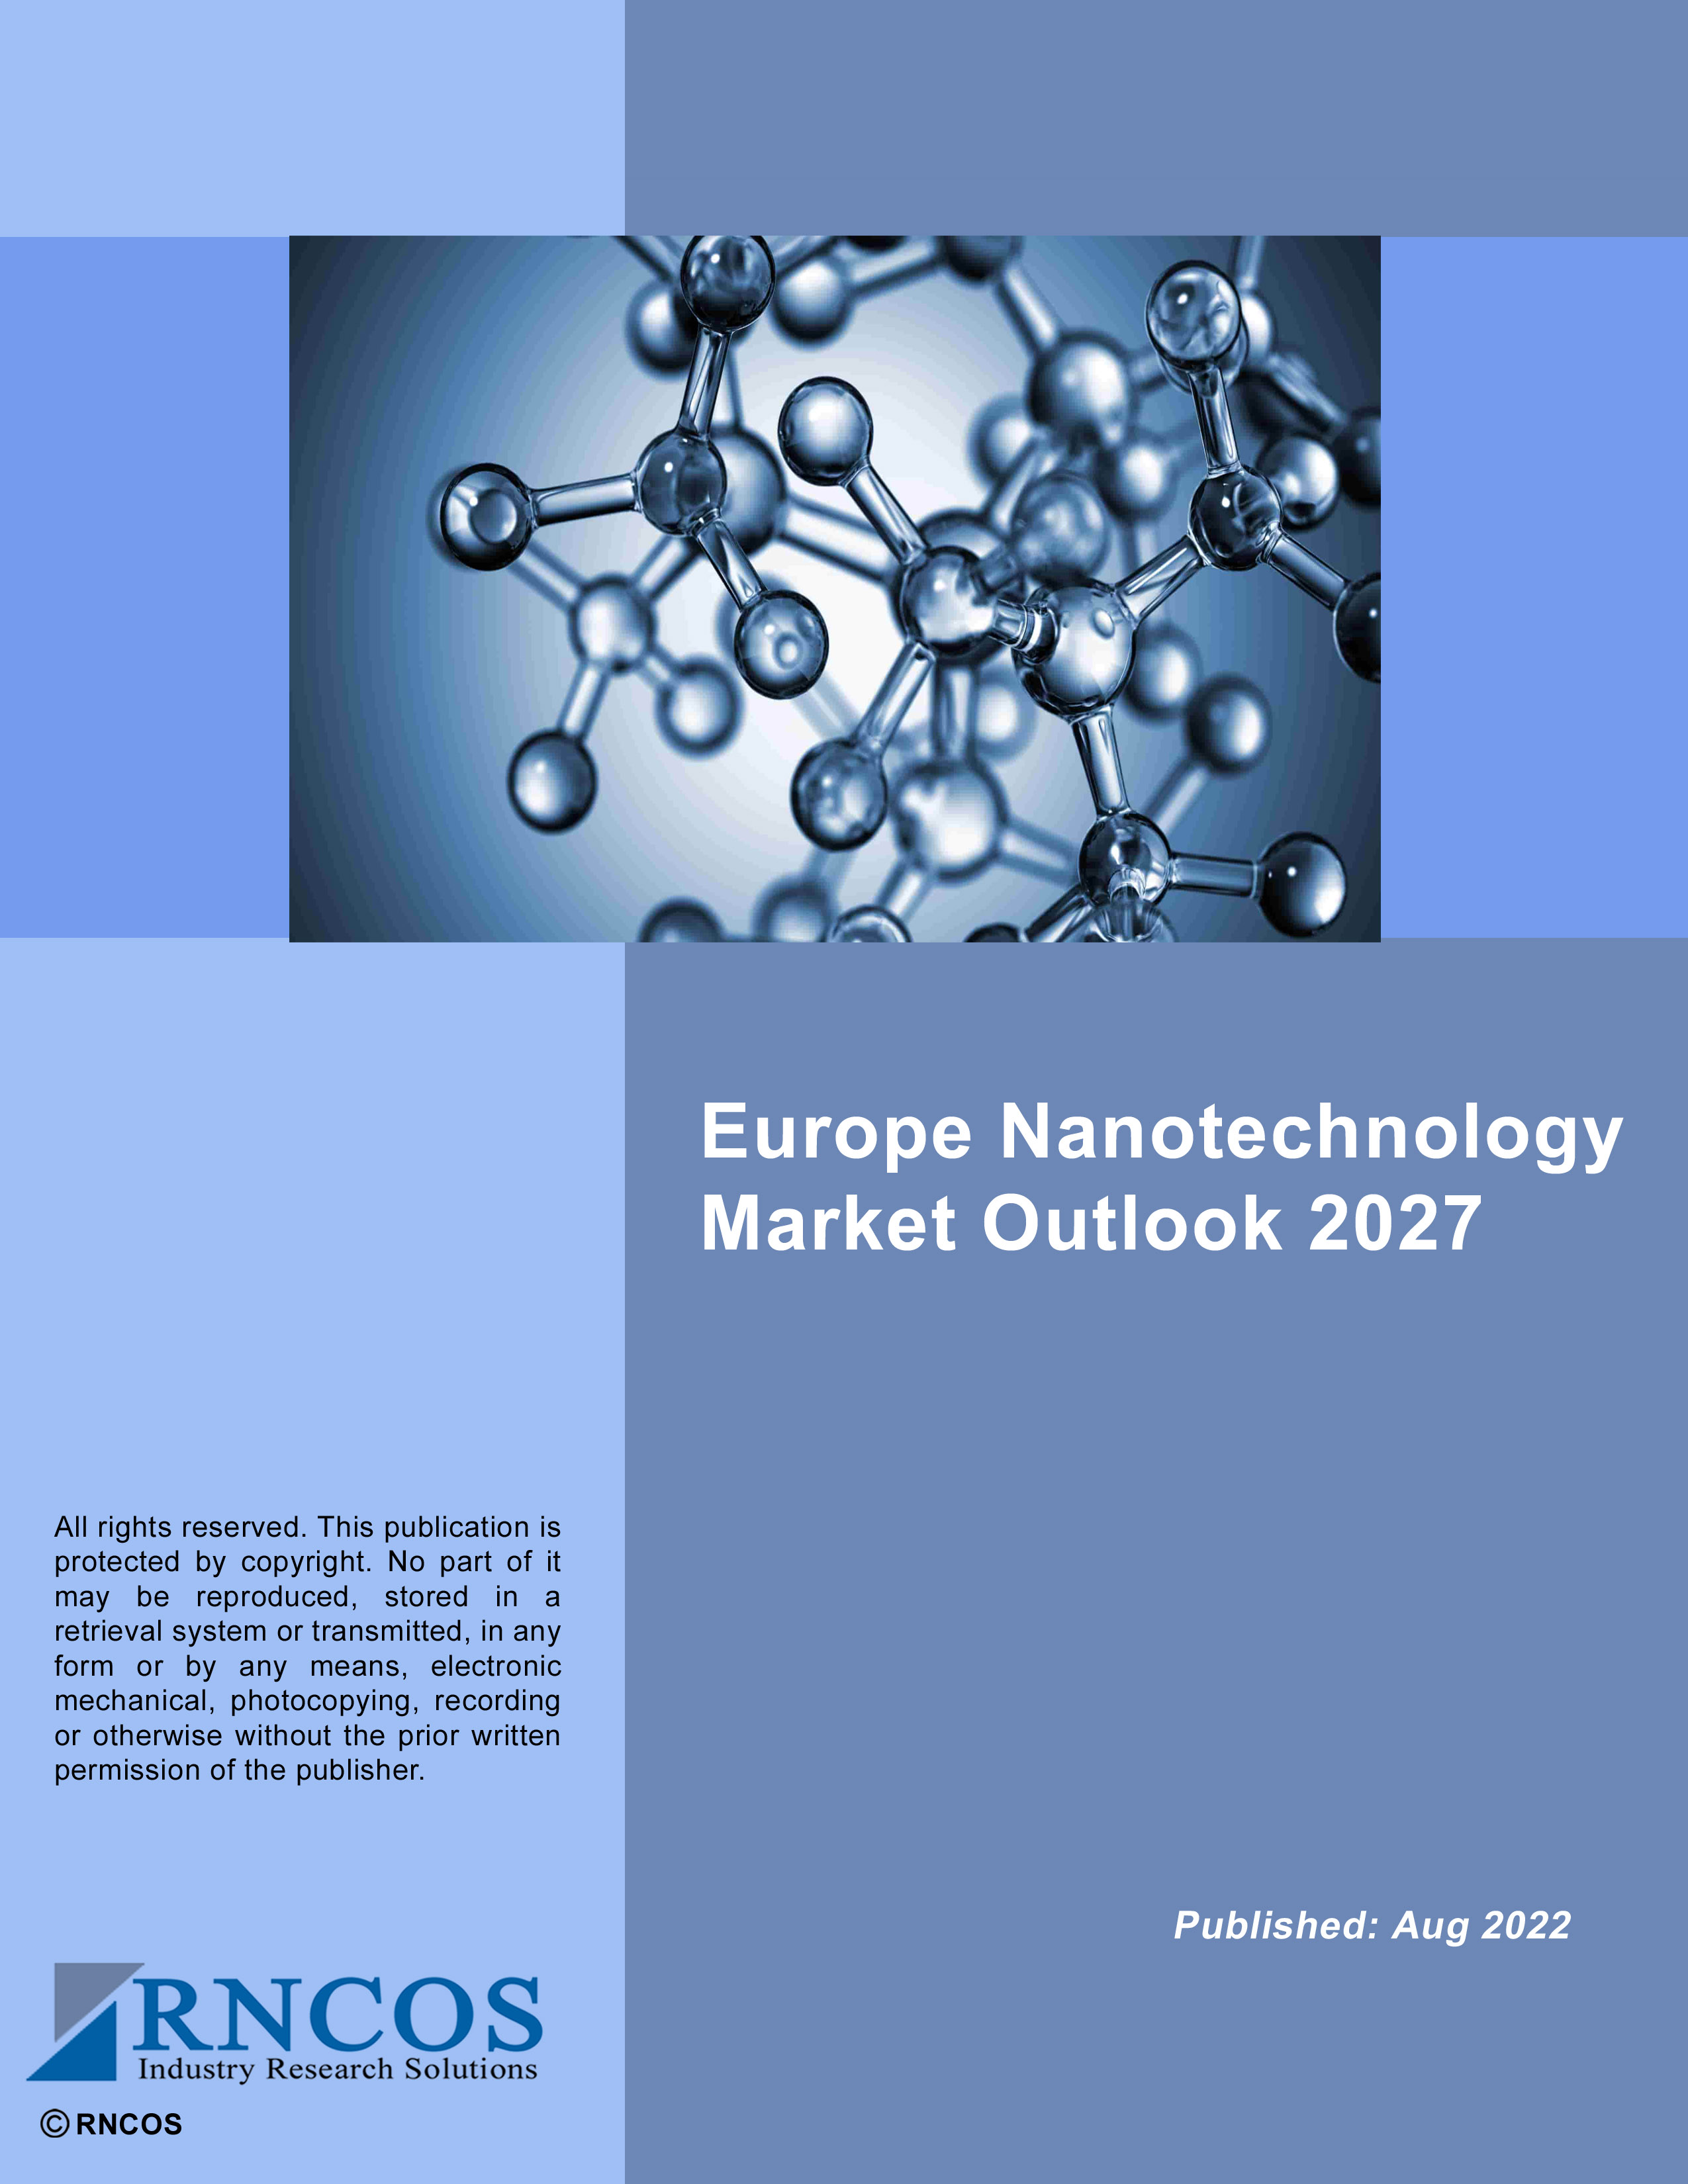 Europe Nanotechnology Market Outlook 2027 Research Report